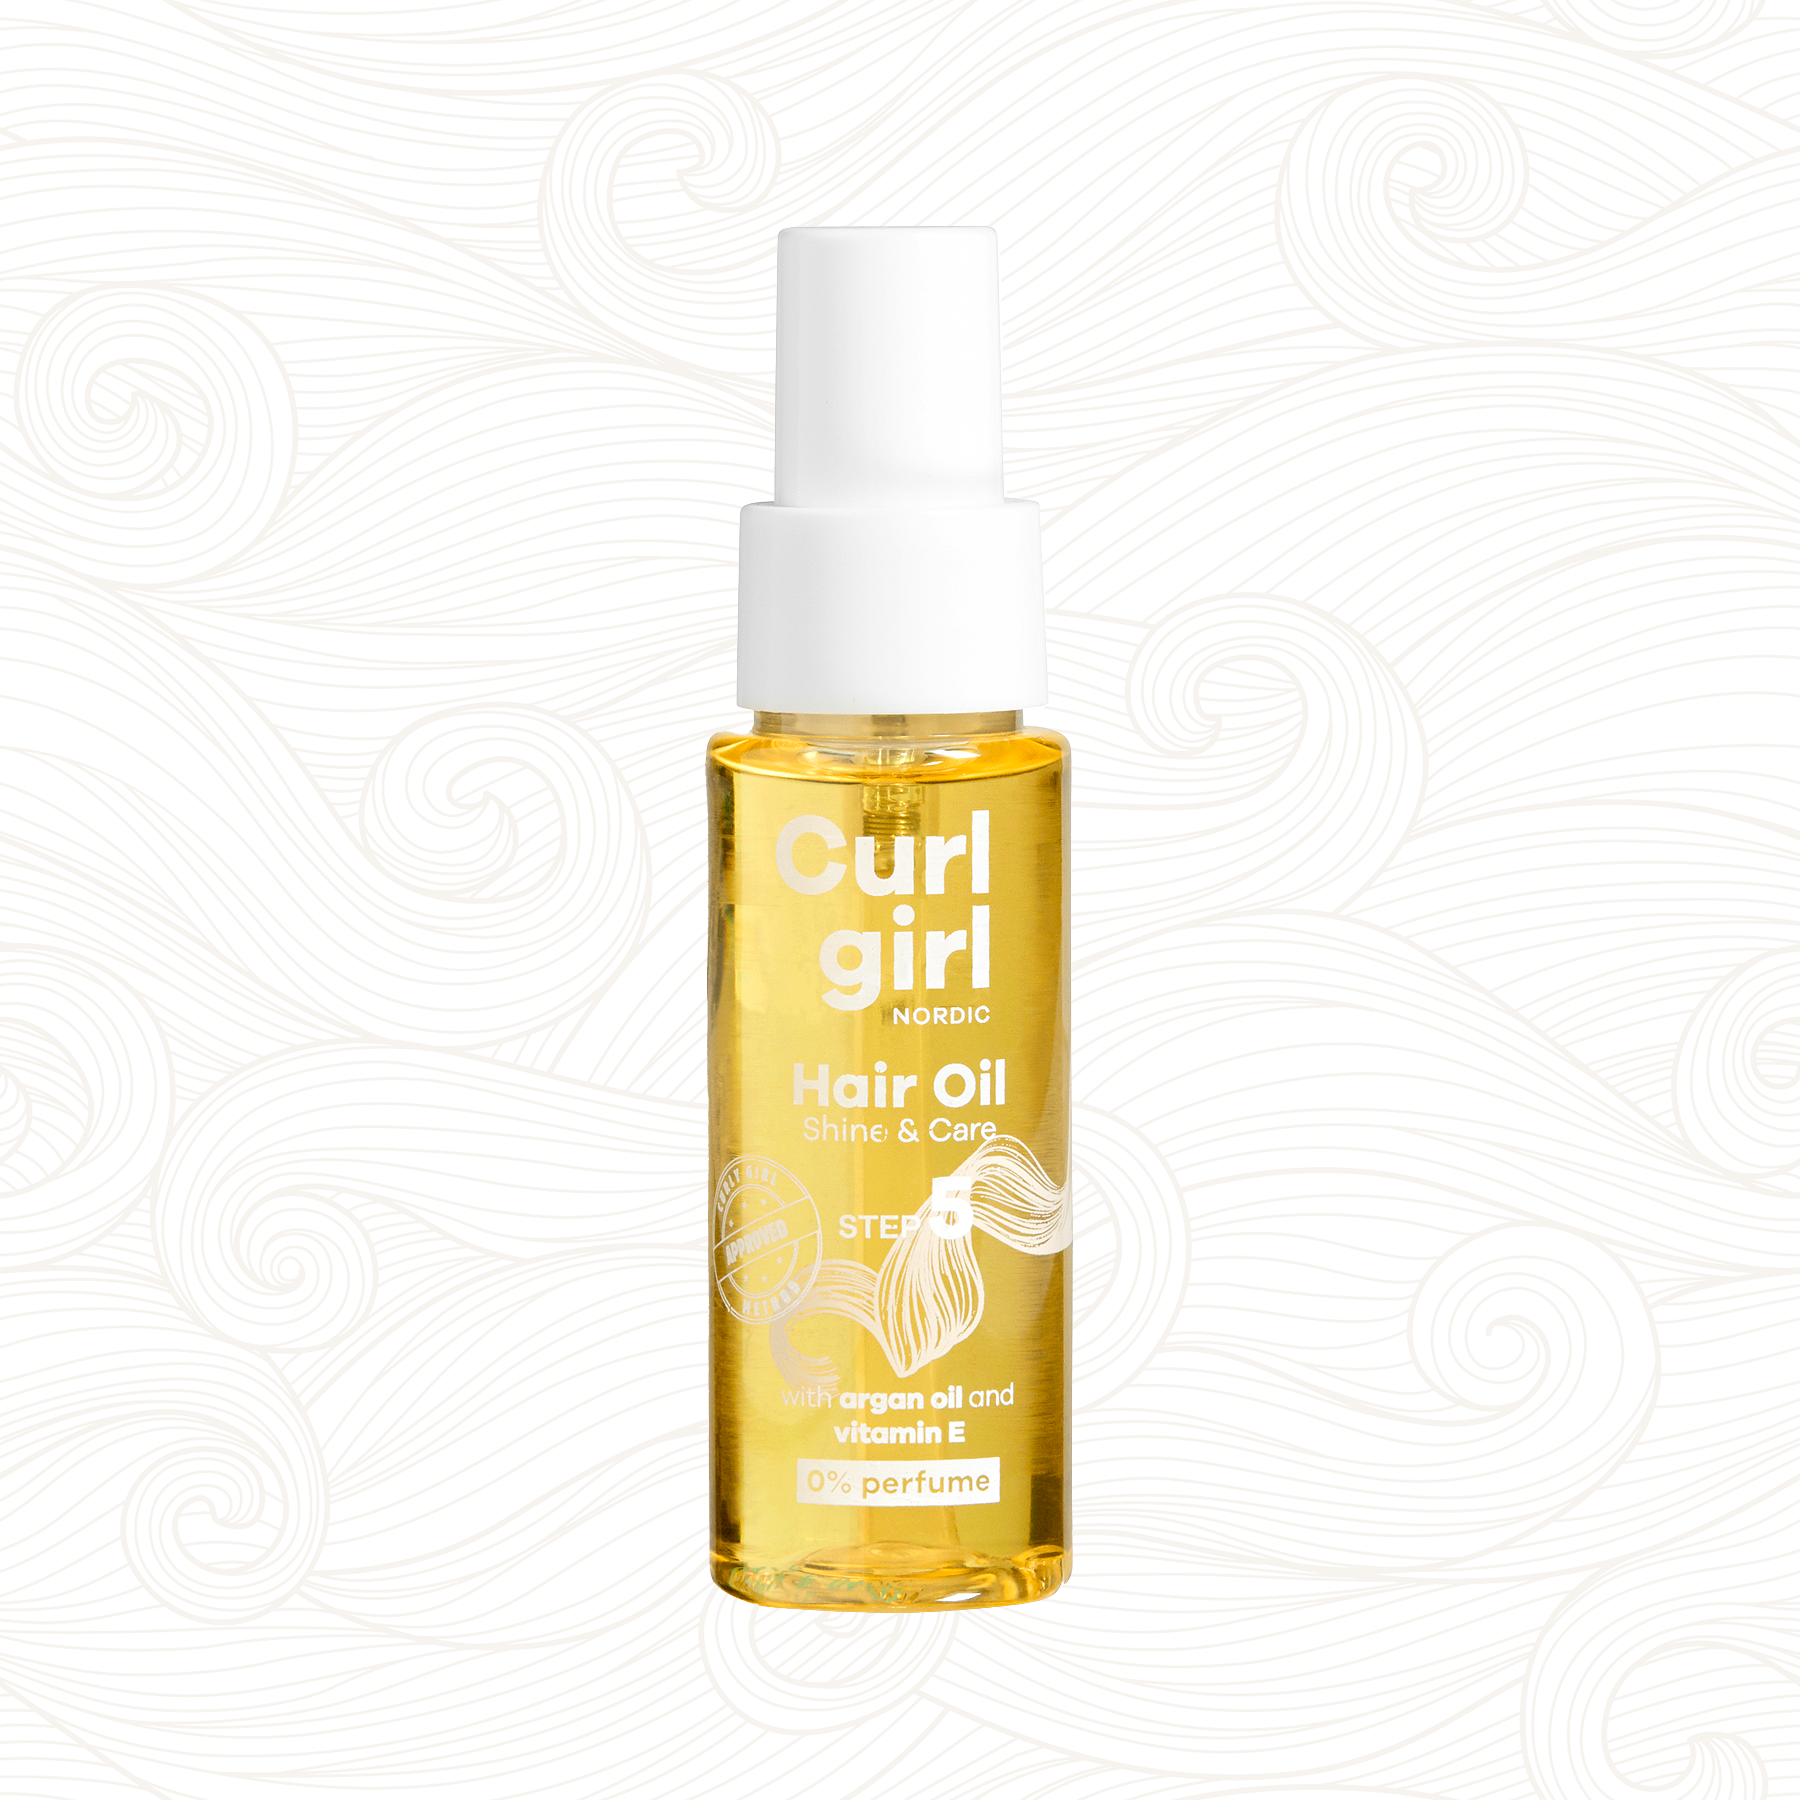 Curl Girl Nordic | Hair Oil - Shine & Care Gratis /50ml Gratis Produkt SARI CURLS | Dein Lockenshop